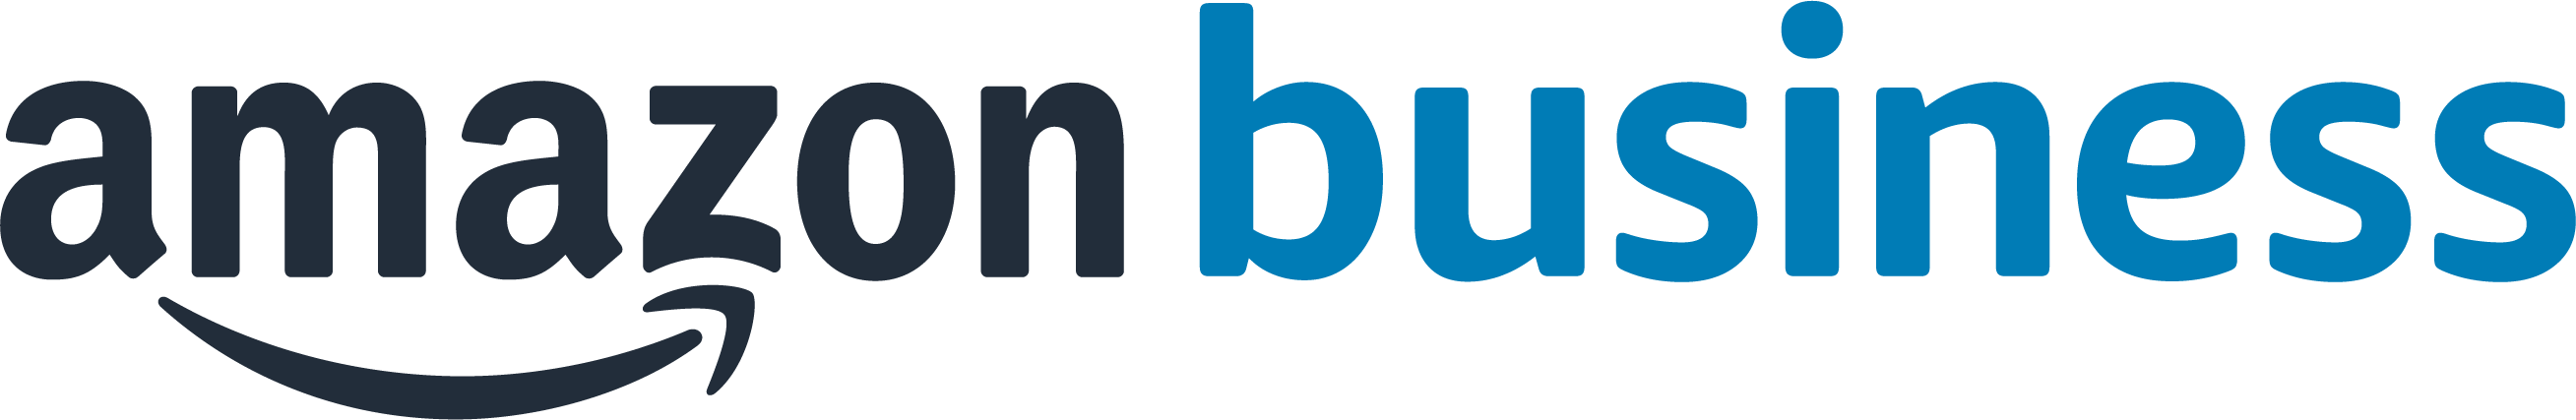 amazon business logo